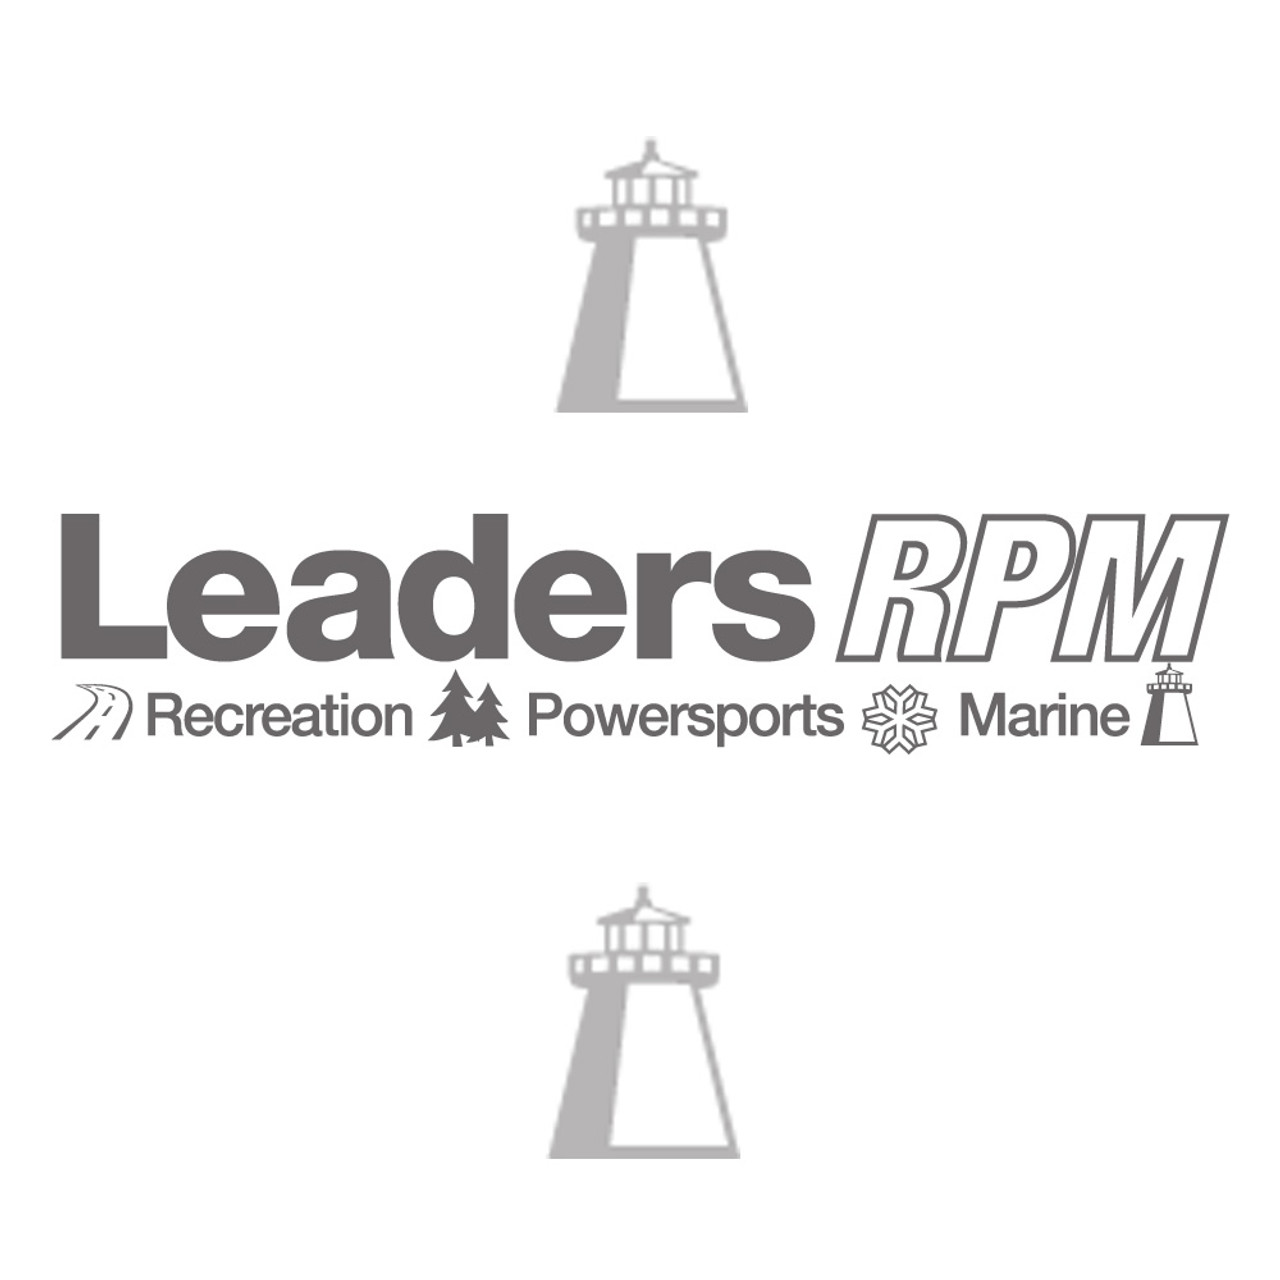 Leaders RPM New Th Blk Gunnel Covers, 1007911-1BJ2BIN0293